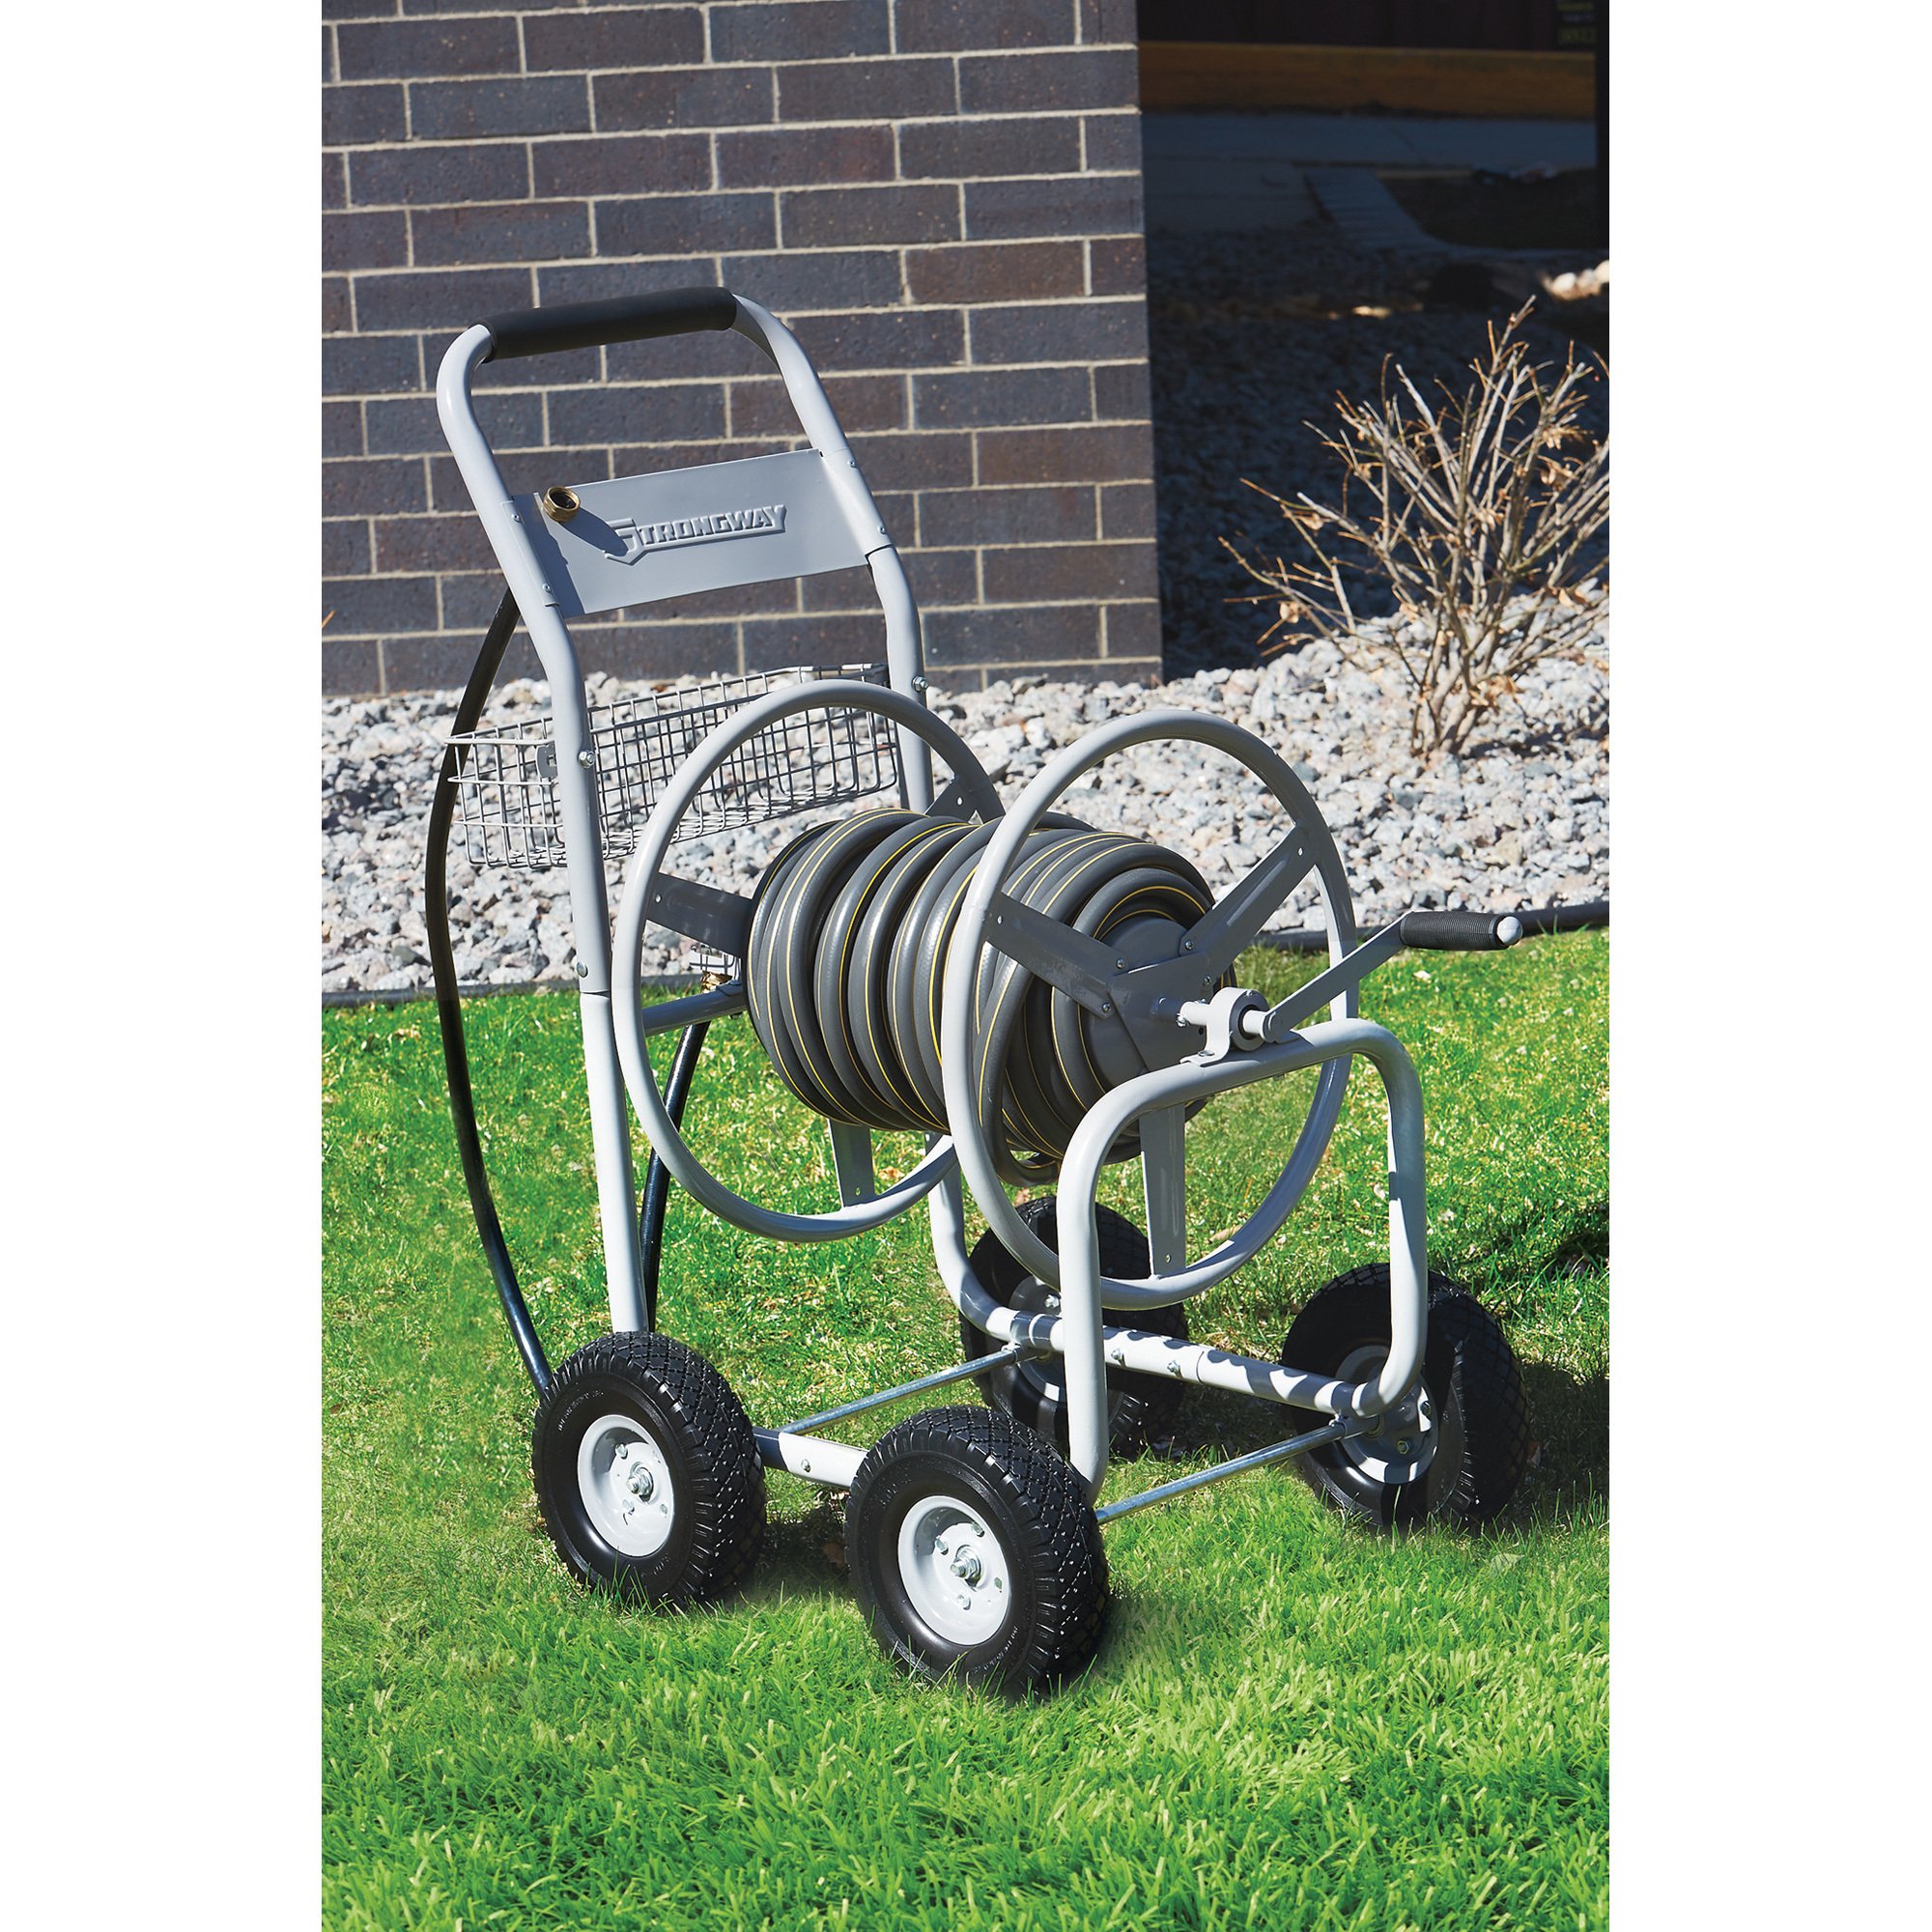 Strongway Garden Hose Reel Cart Holds 400ft. x 5/8in. Hose 